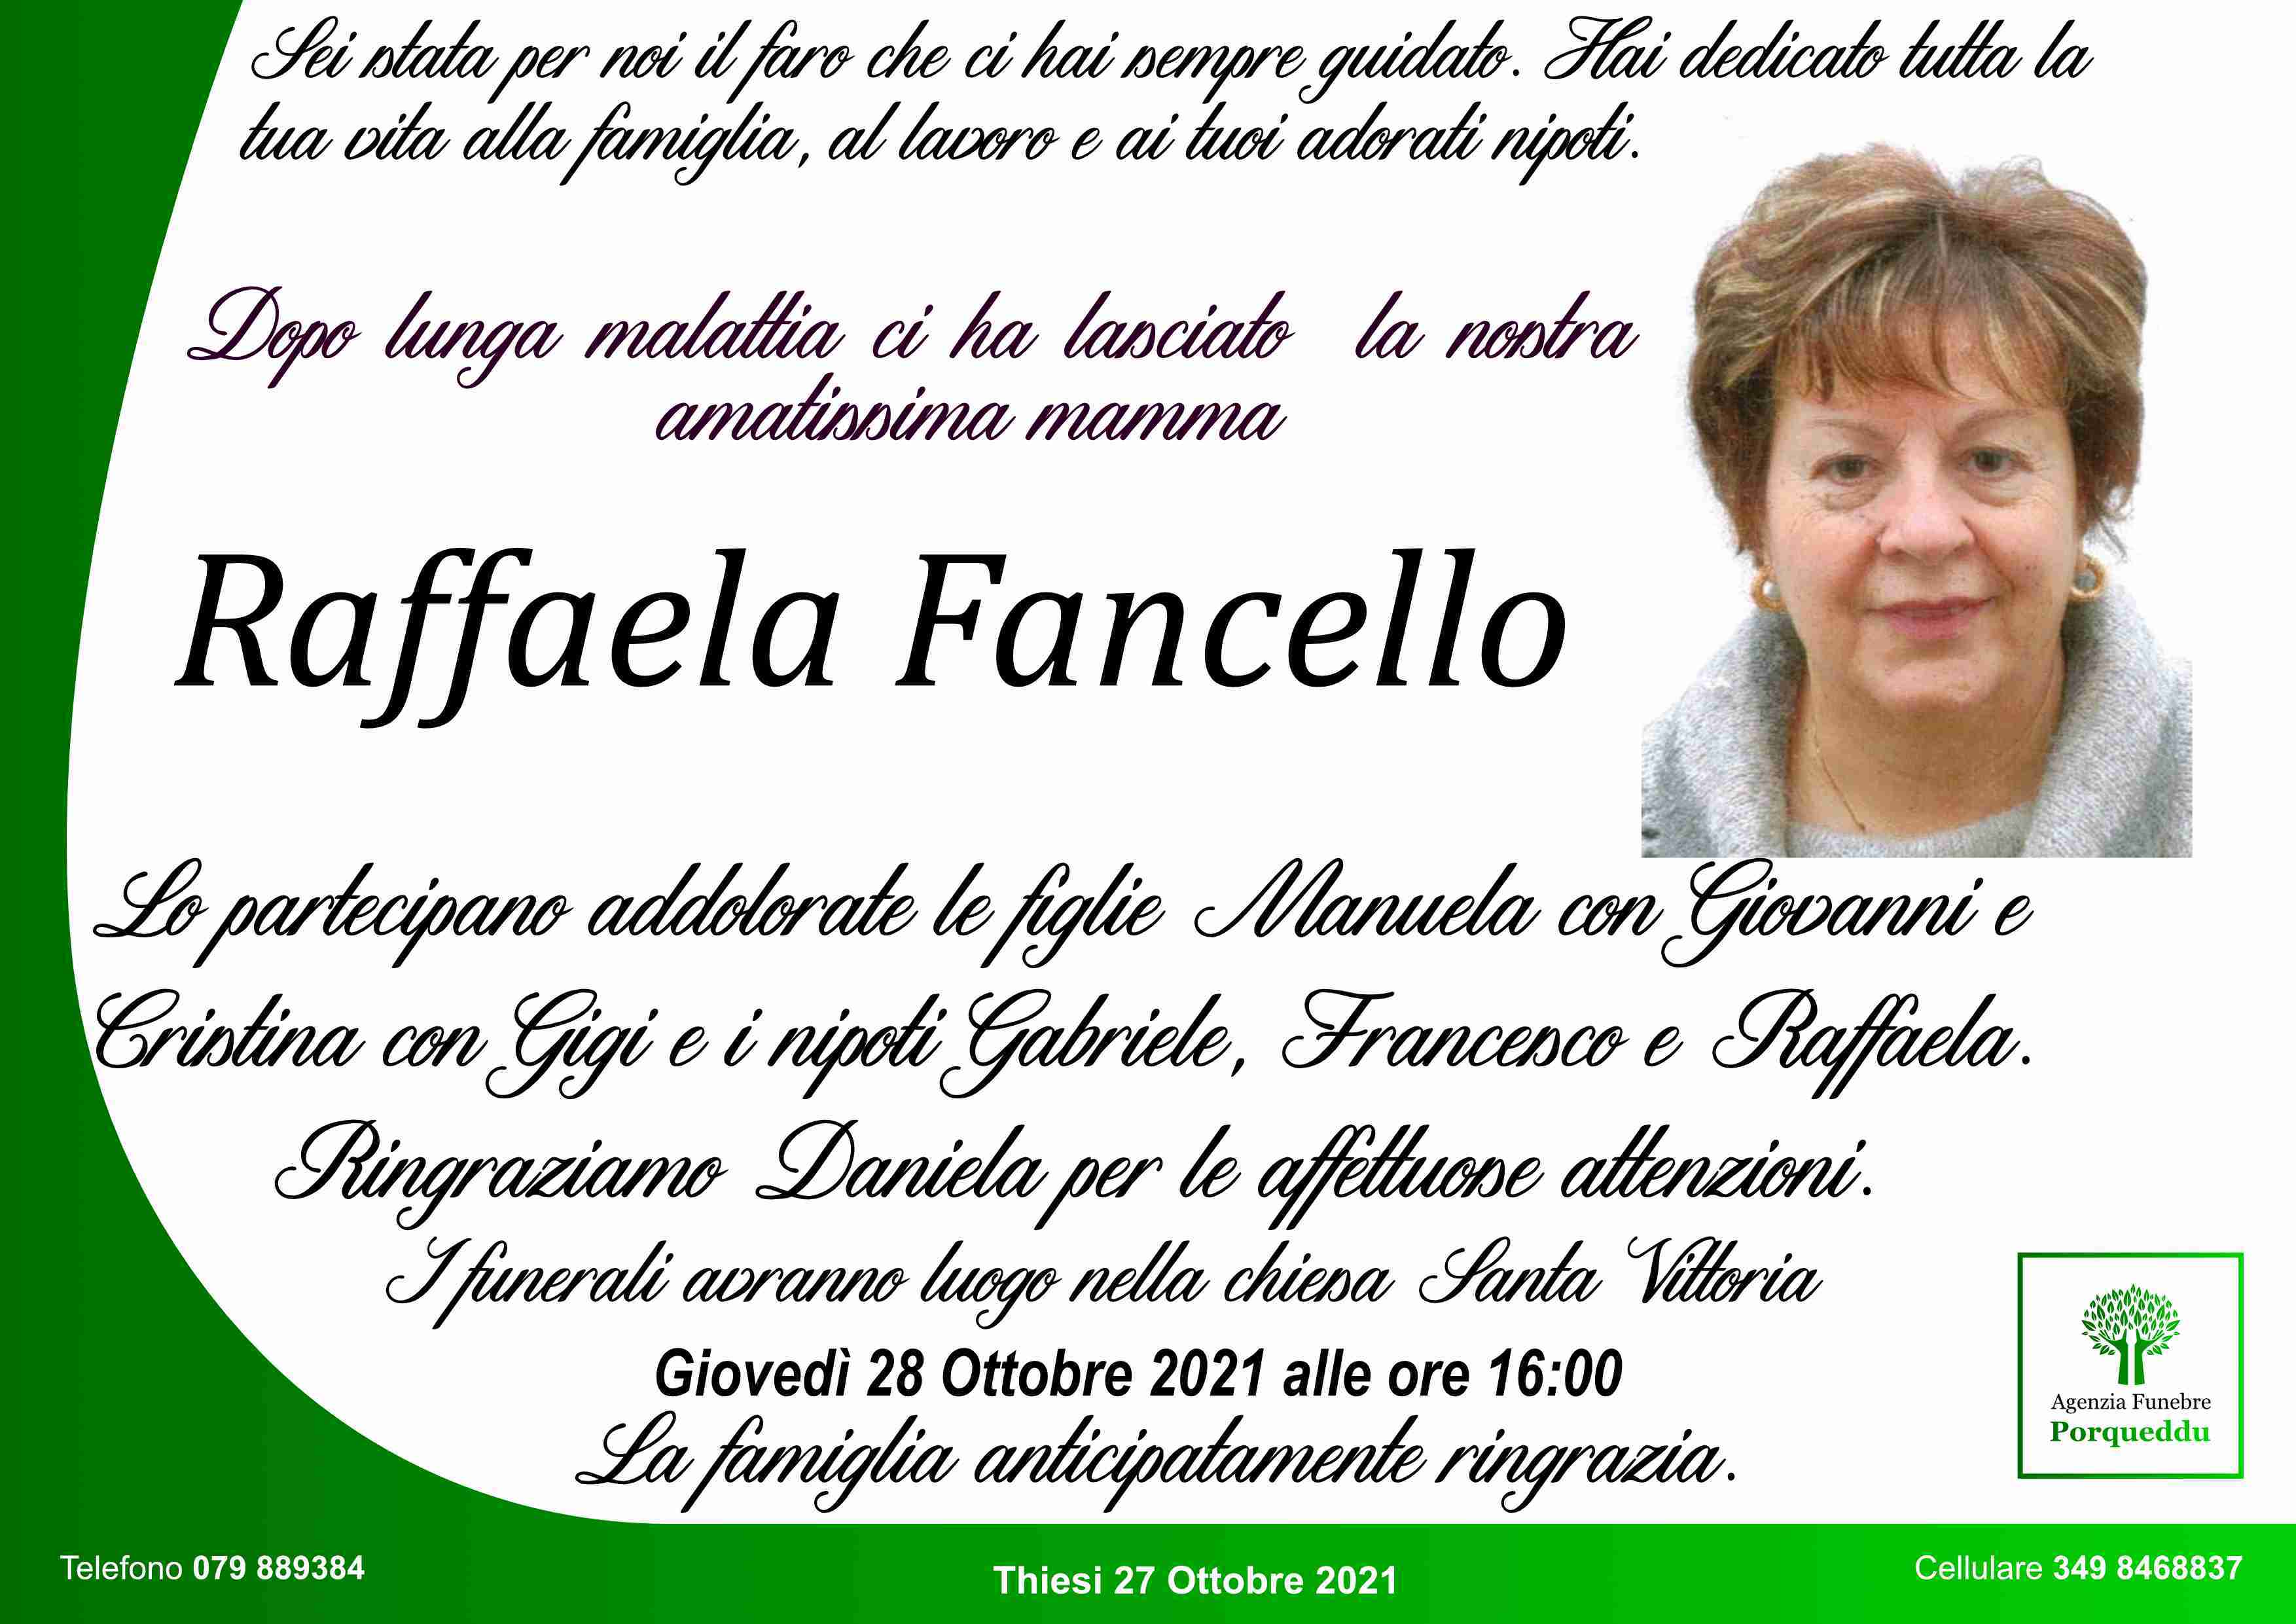 Raffaela Fancello